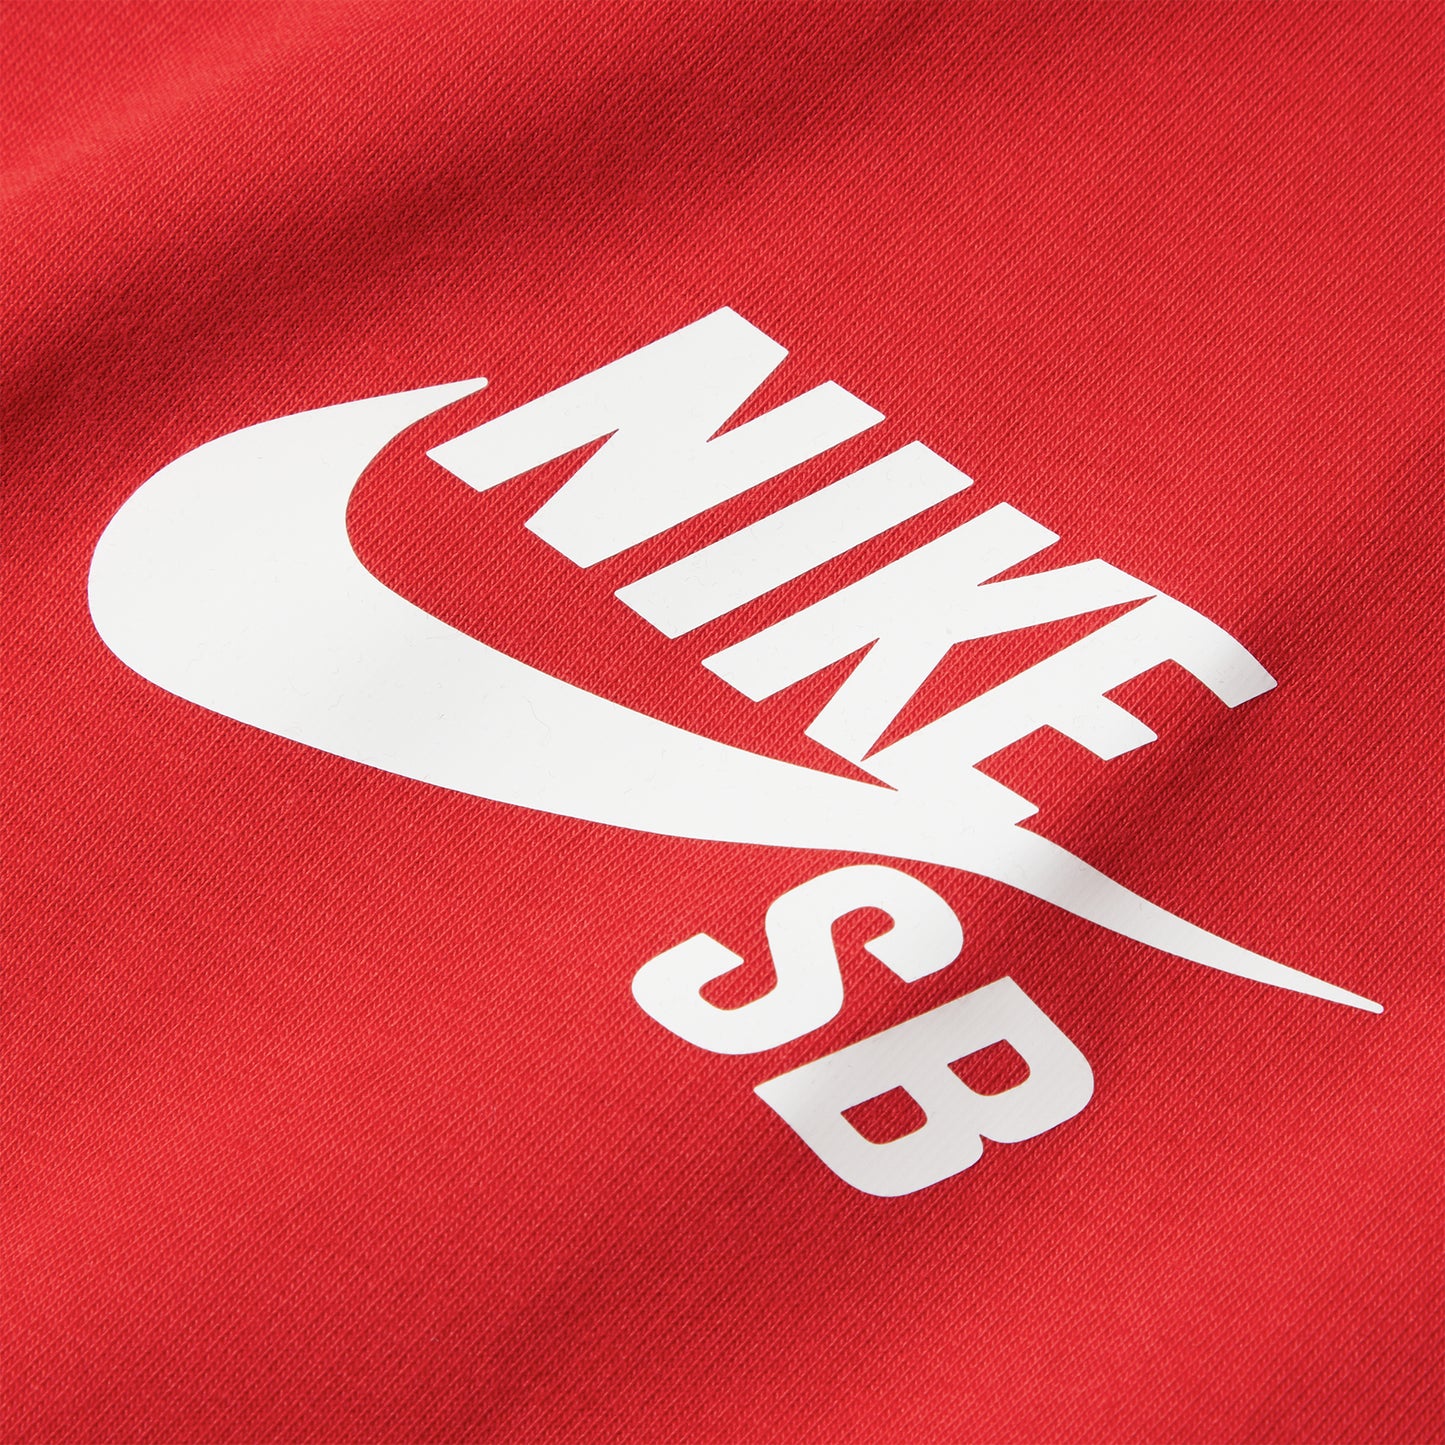 Nike SB Logo Skate T-Shirt (UNIVERSITY RED/WHITE)